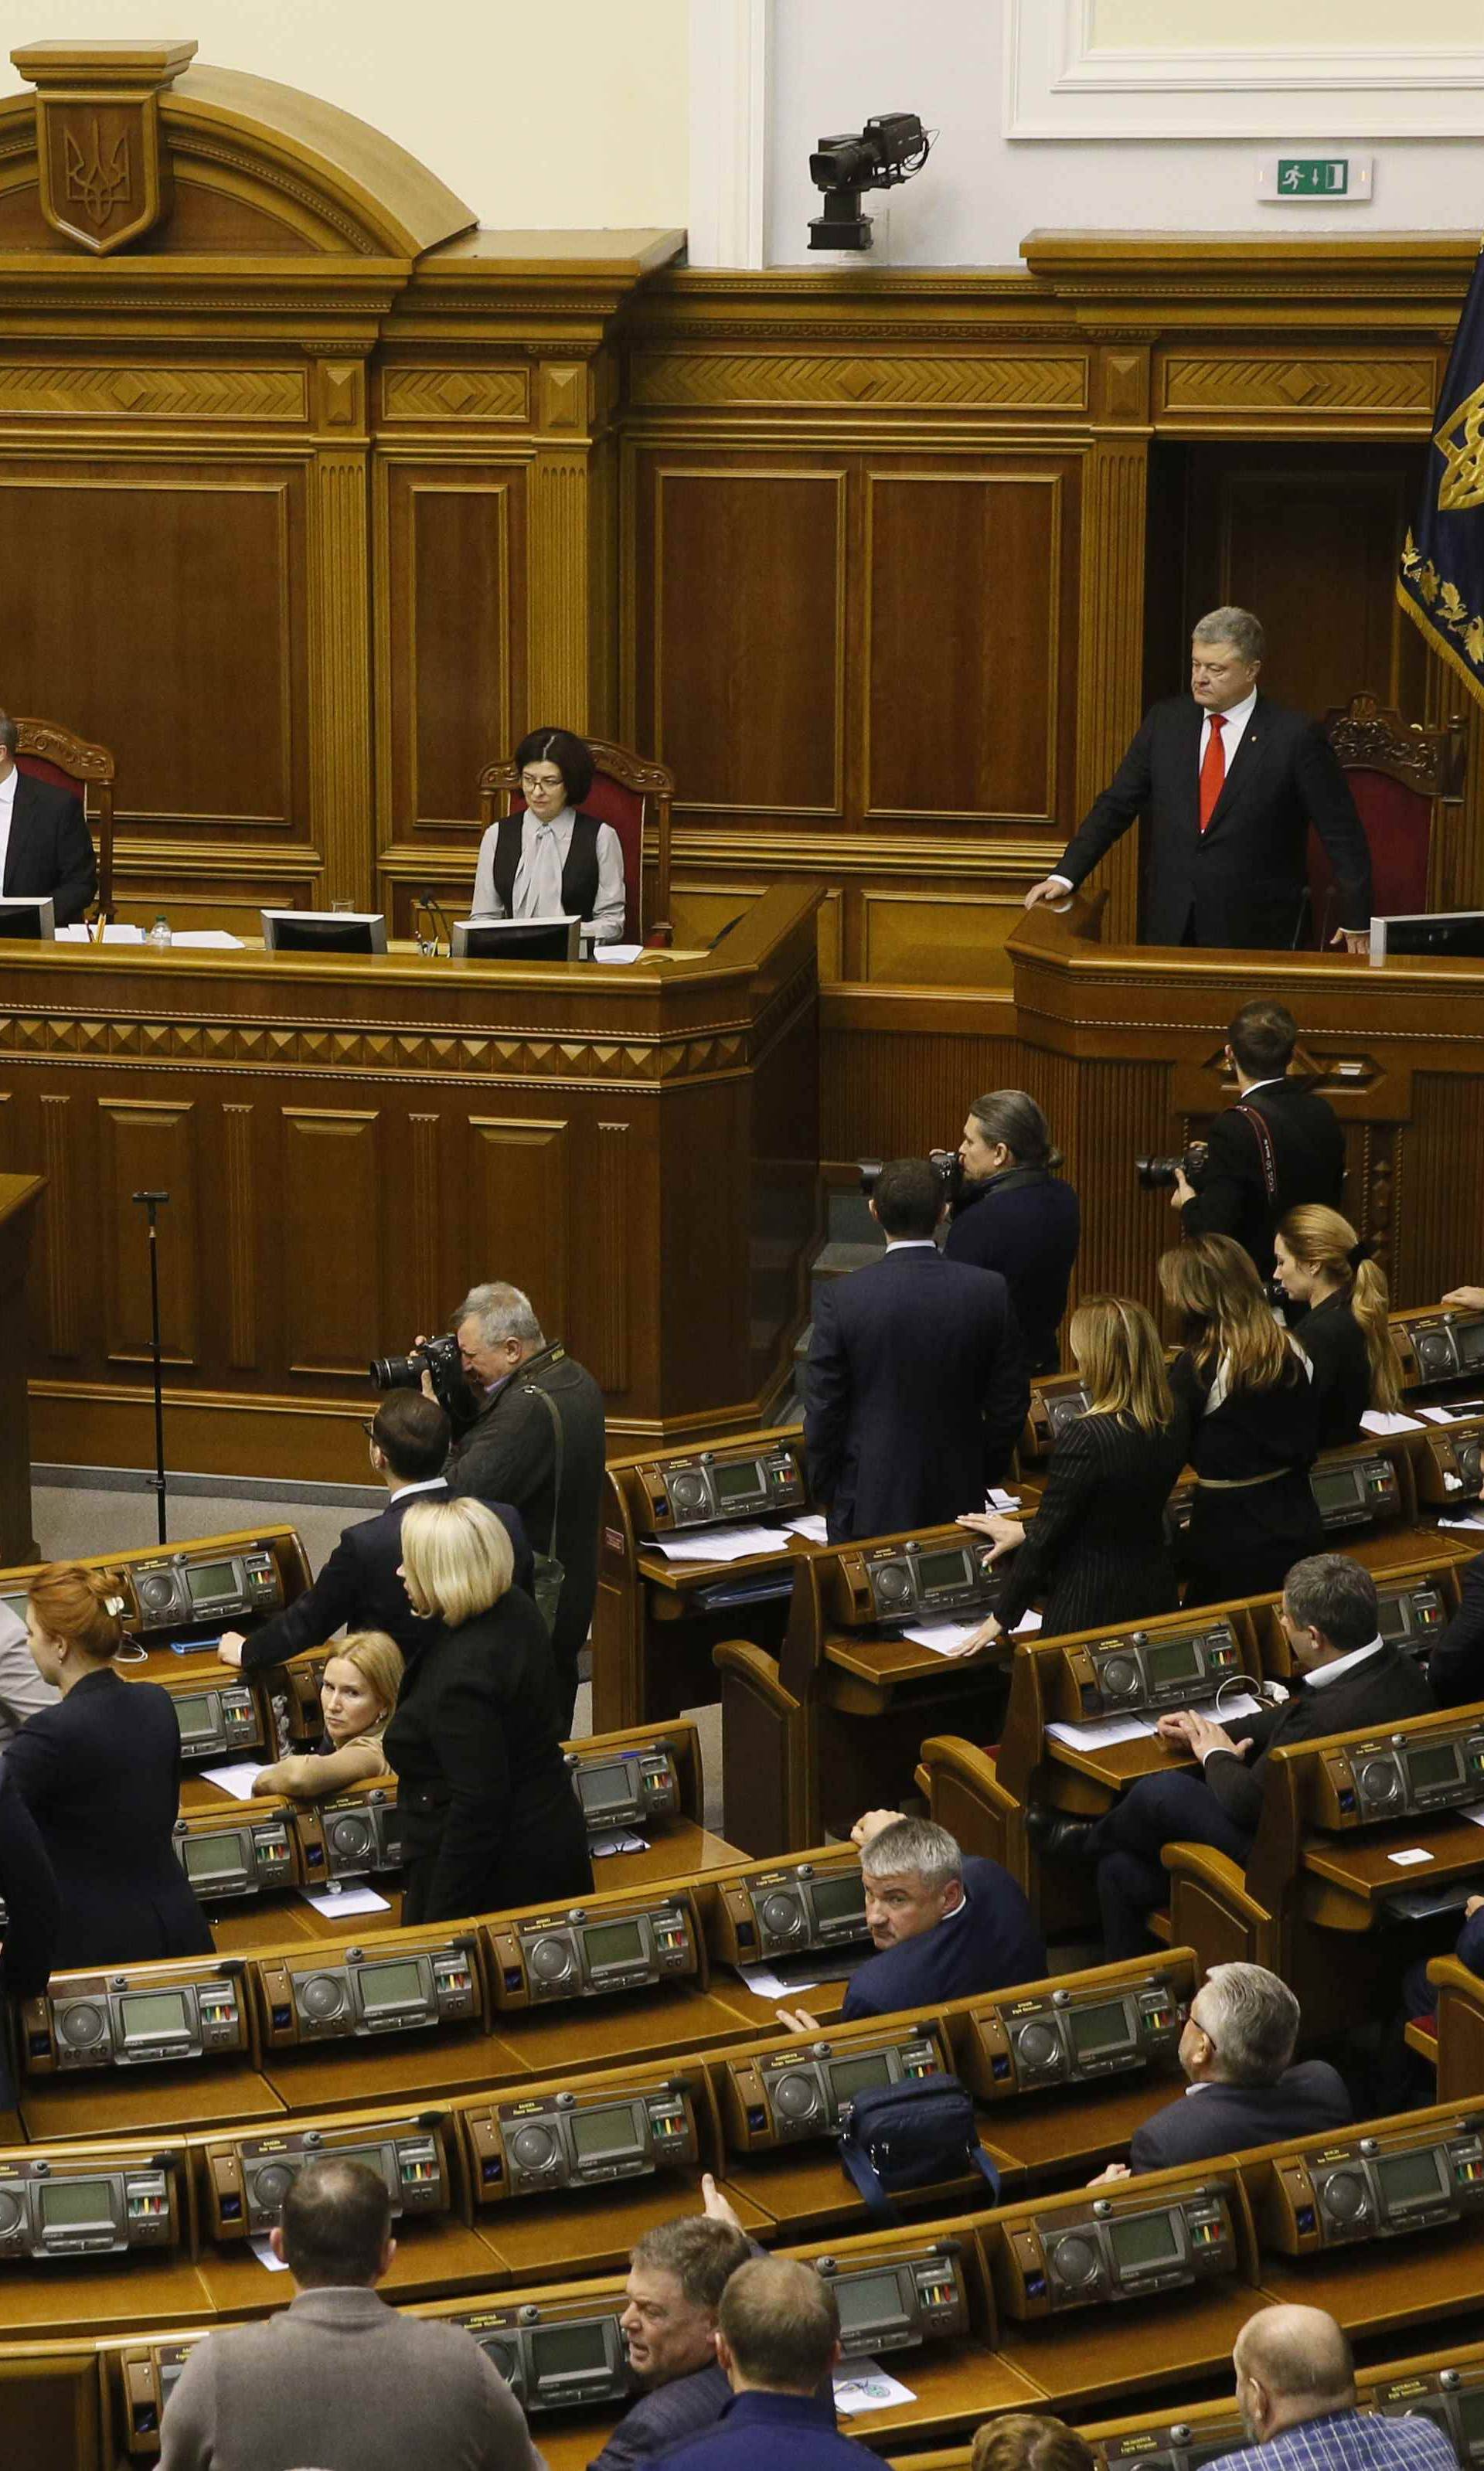 Ukrainian President Poroshenko attends a parliament session in Kiev